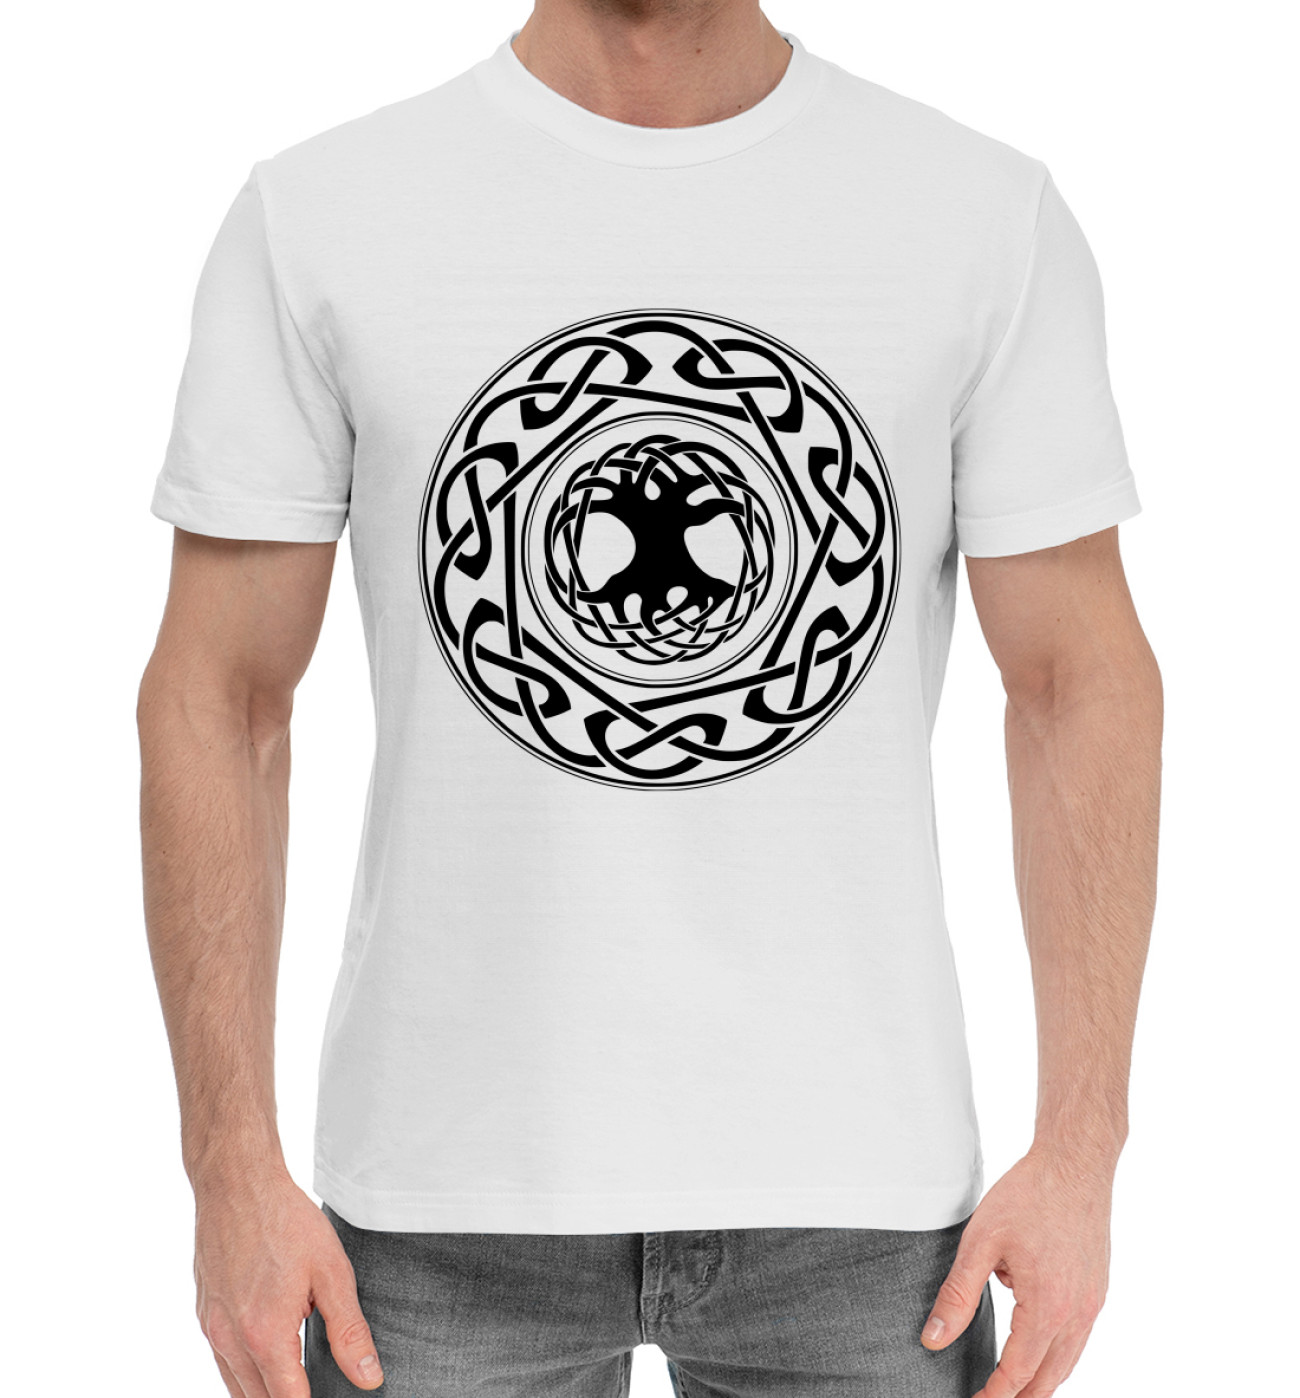 Мужская Хлопковая футболка Древо Жизни, артикул: CLT-586296-hfu-2